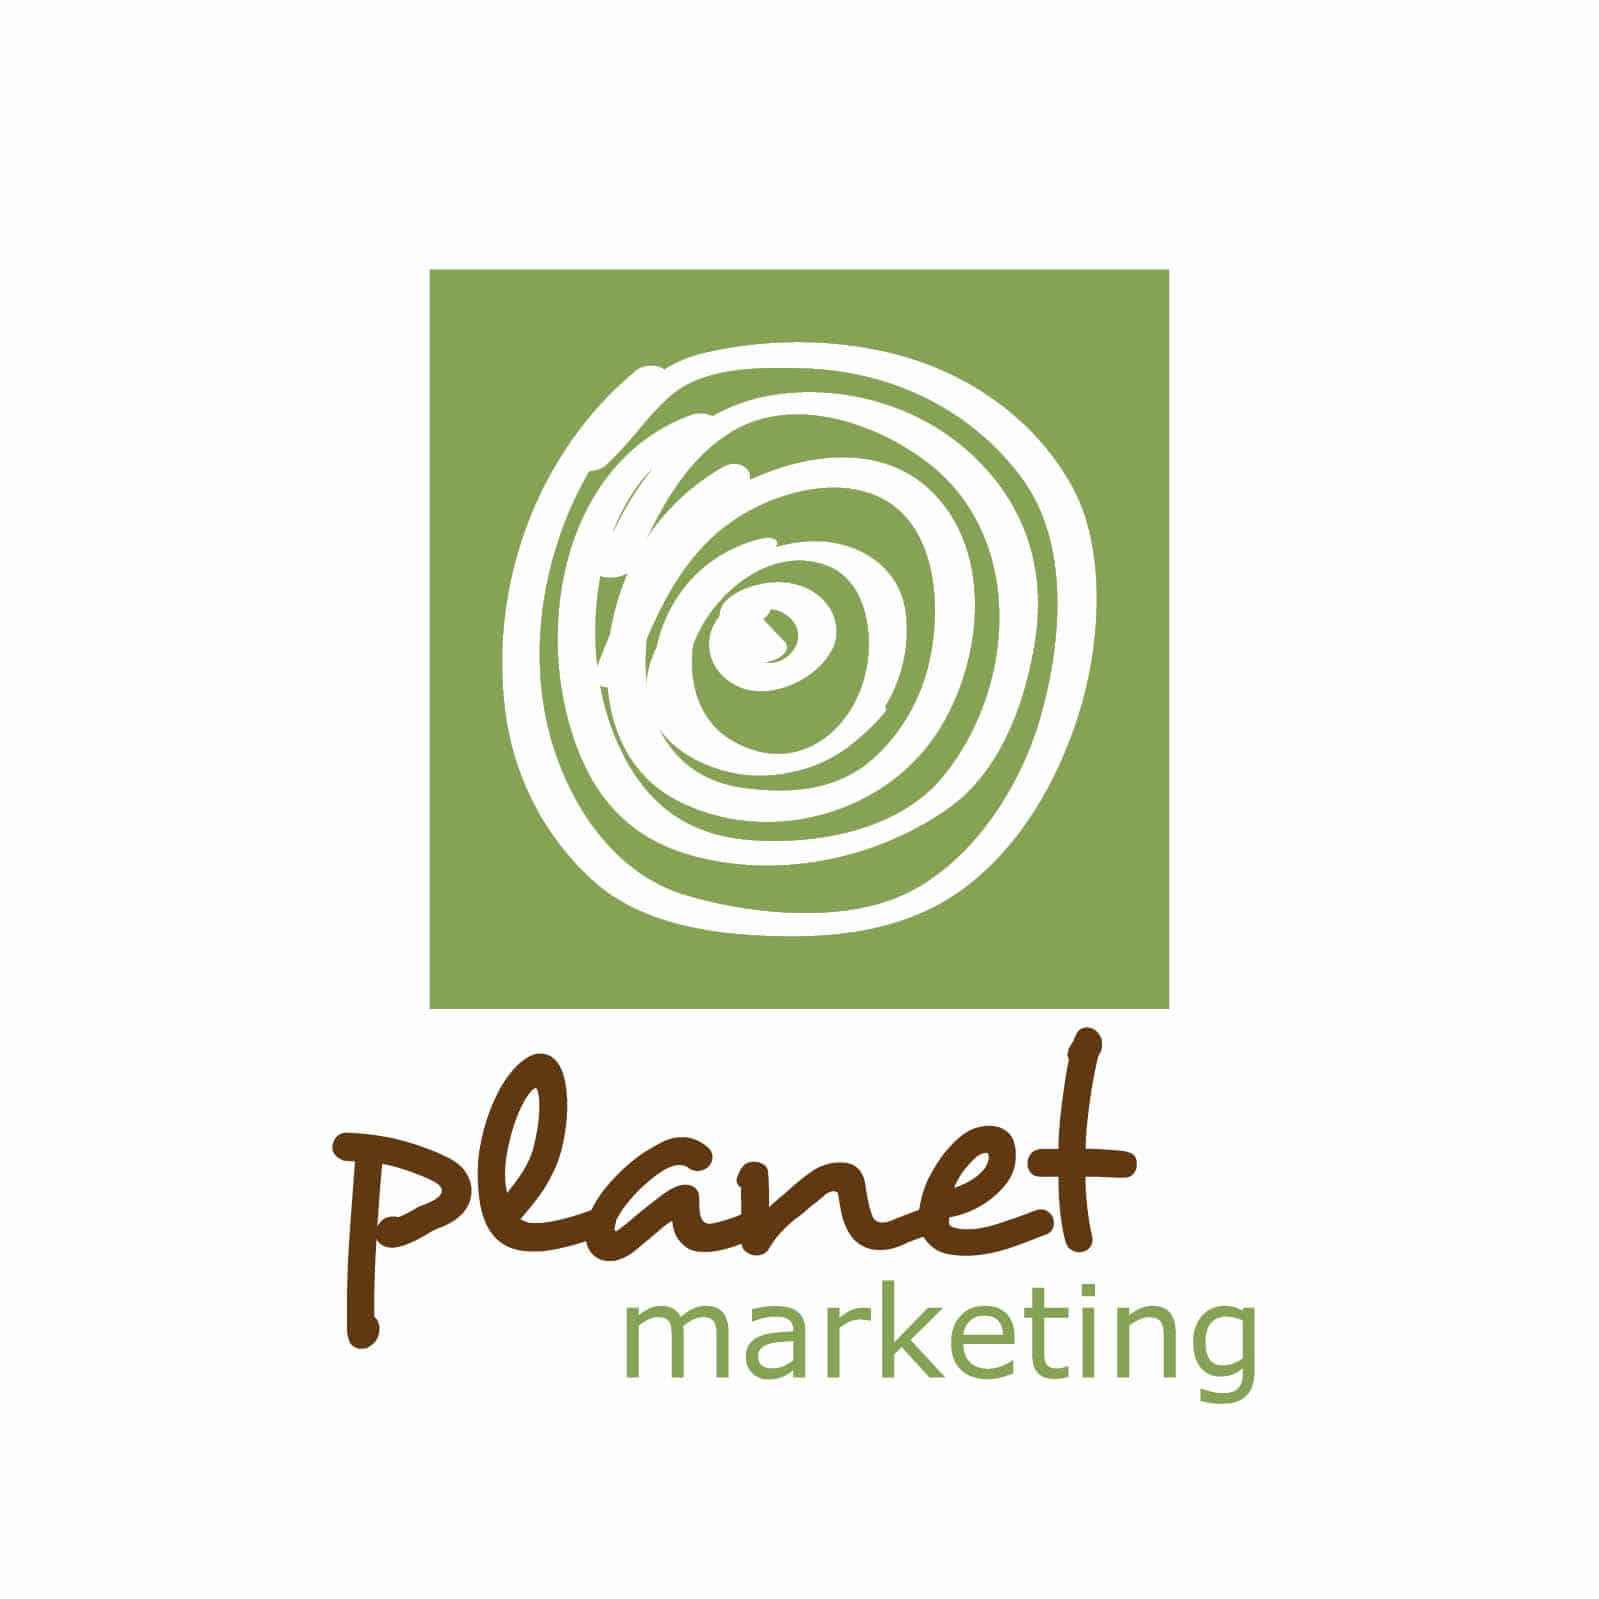 Planet Marketing